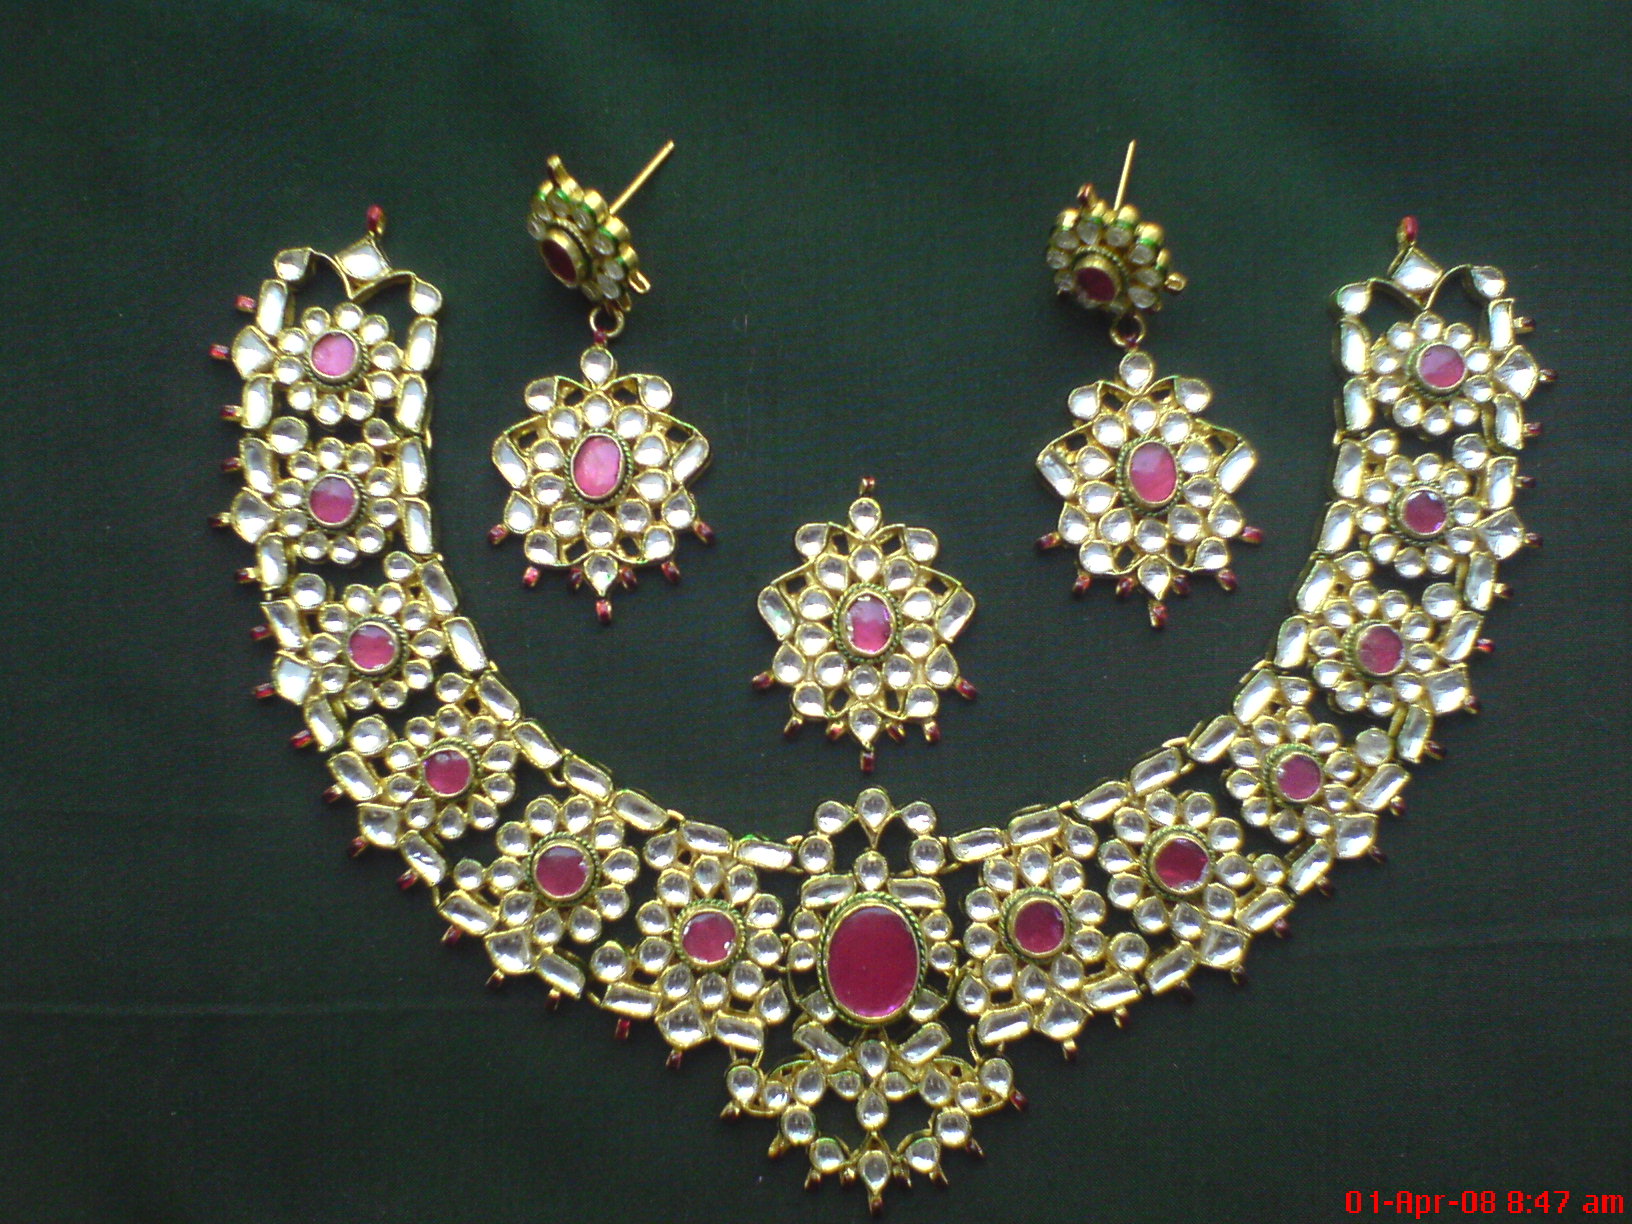 http://events.webindia123.com/events/asp/aspupload/Uploads%5C3819%5C3085_Indian-jewellery-designs-9.jpg